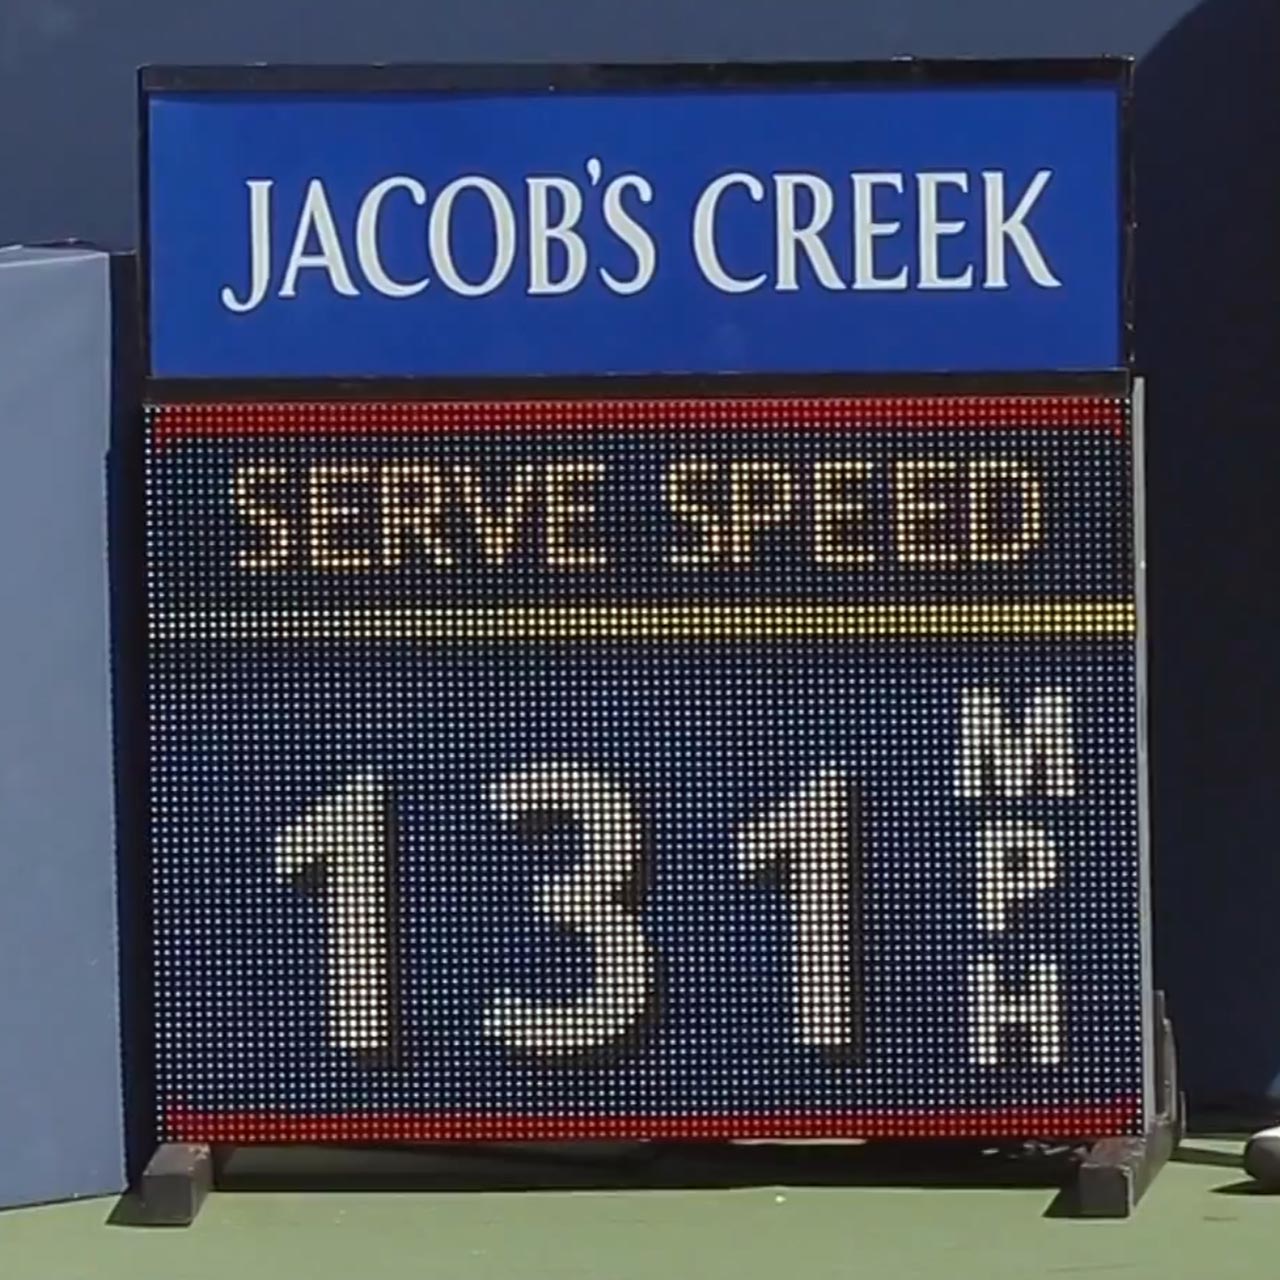 Sabine Lisicki sets new tennis serve speed record at 131 mph